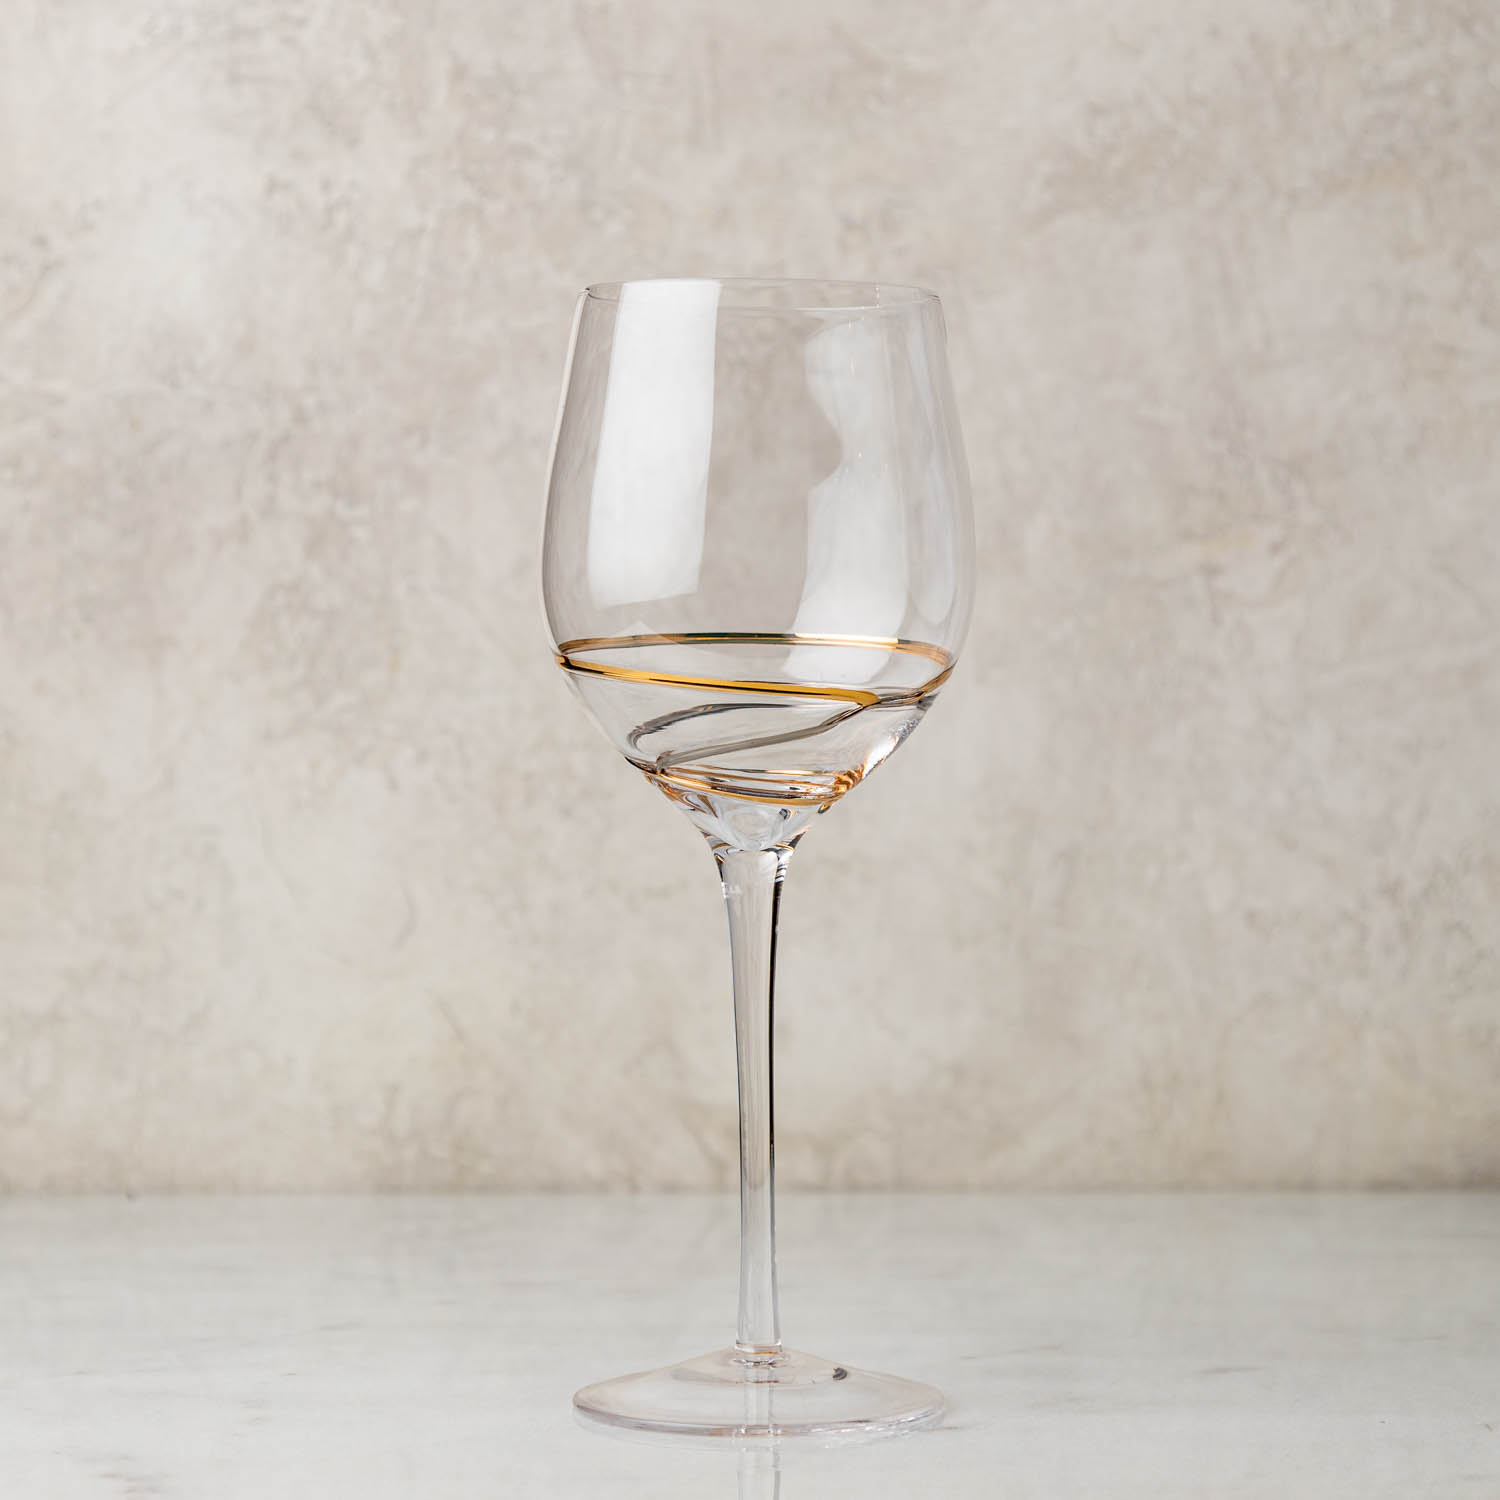 Cooper's Hawk Winery & Restaurants > End of Season > Joy Wine Glass,  stained glass art wine glass, Murano